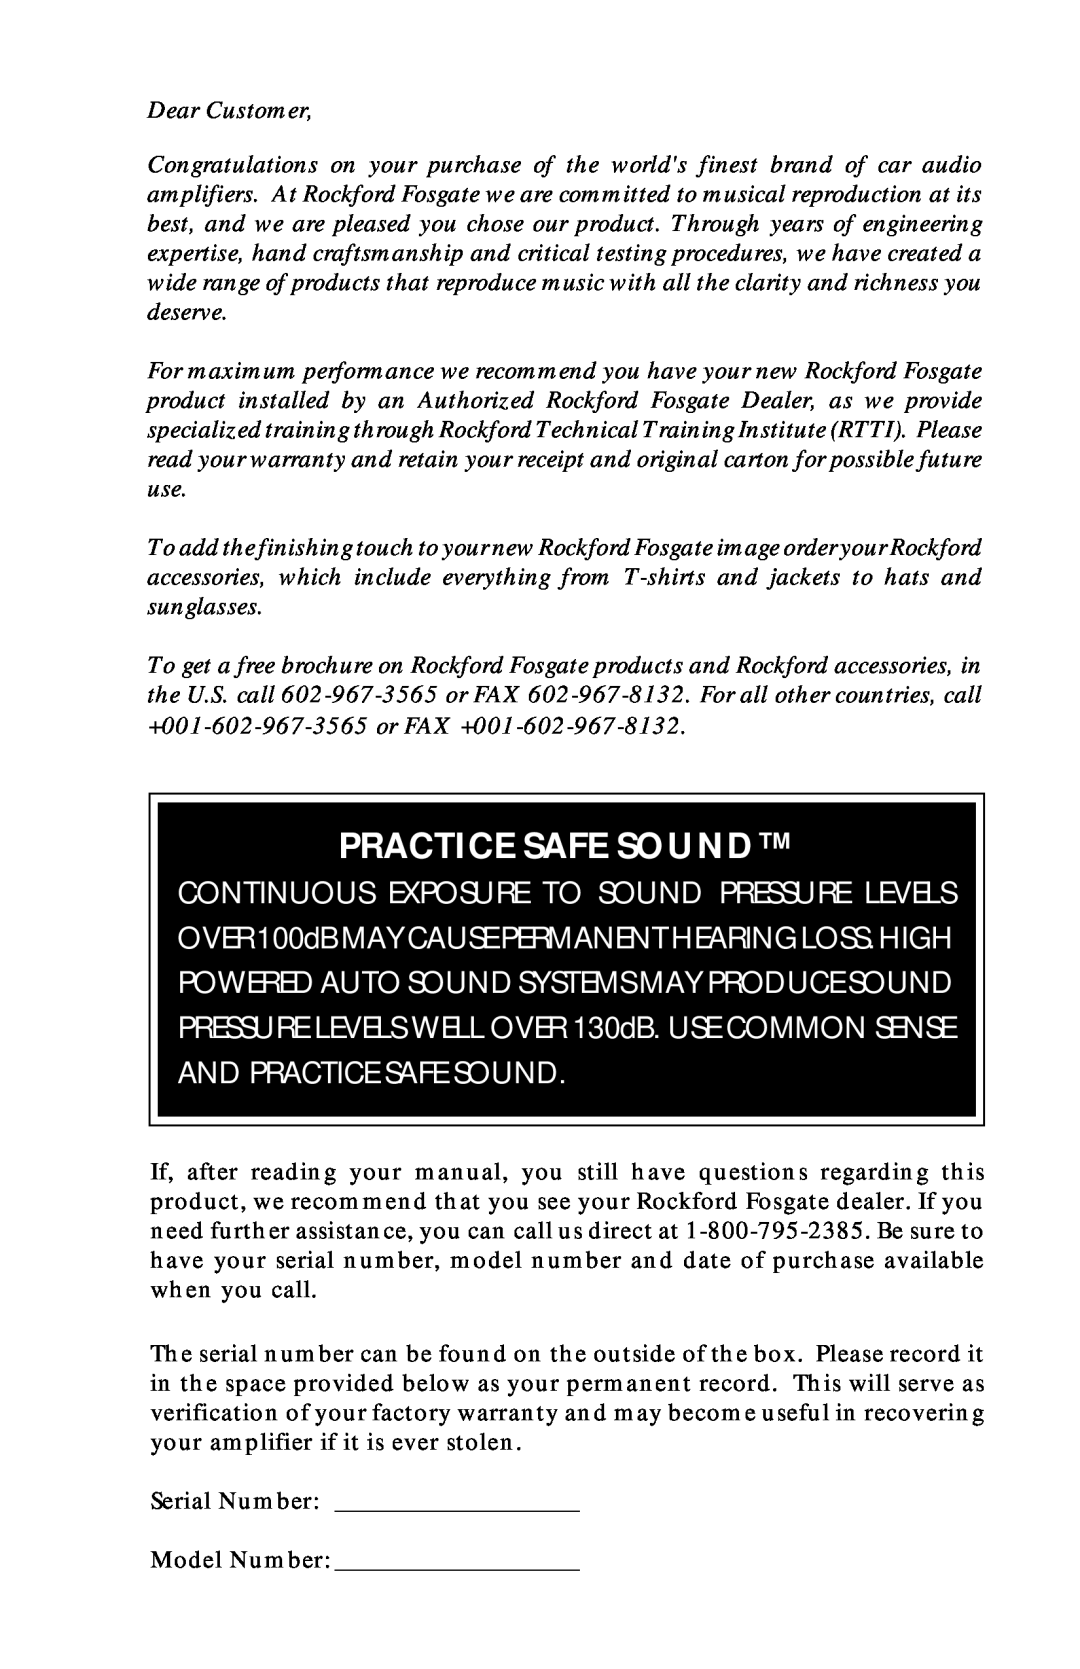 Rockford Fosgate 400x4 operation manual Practice Safe Sound 